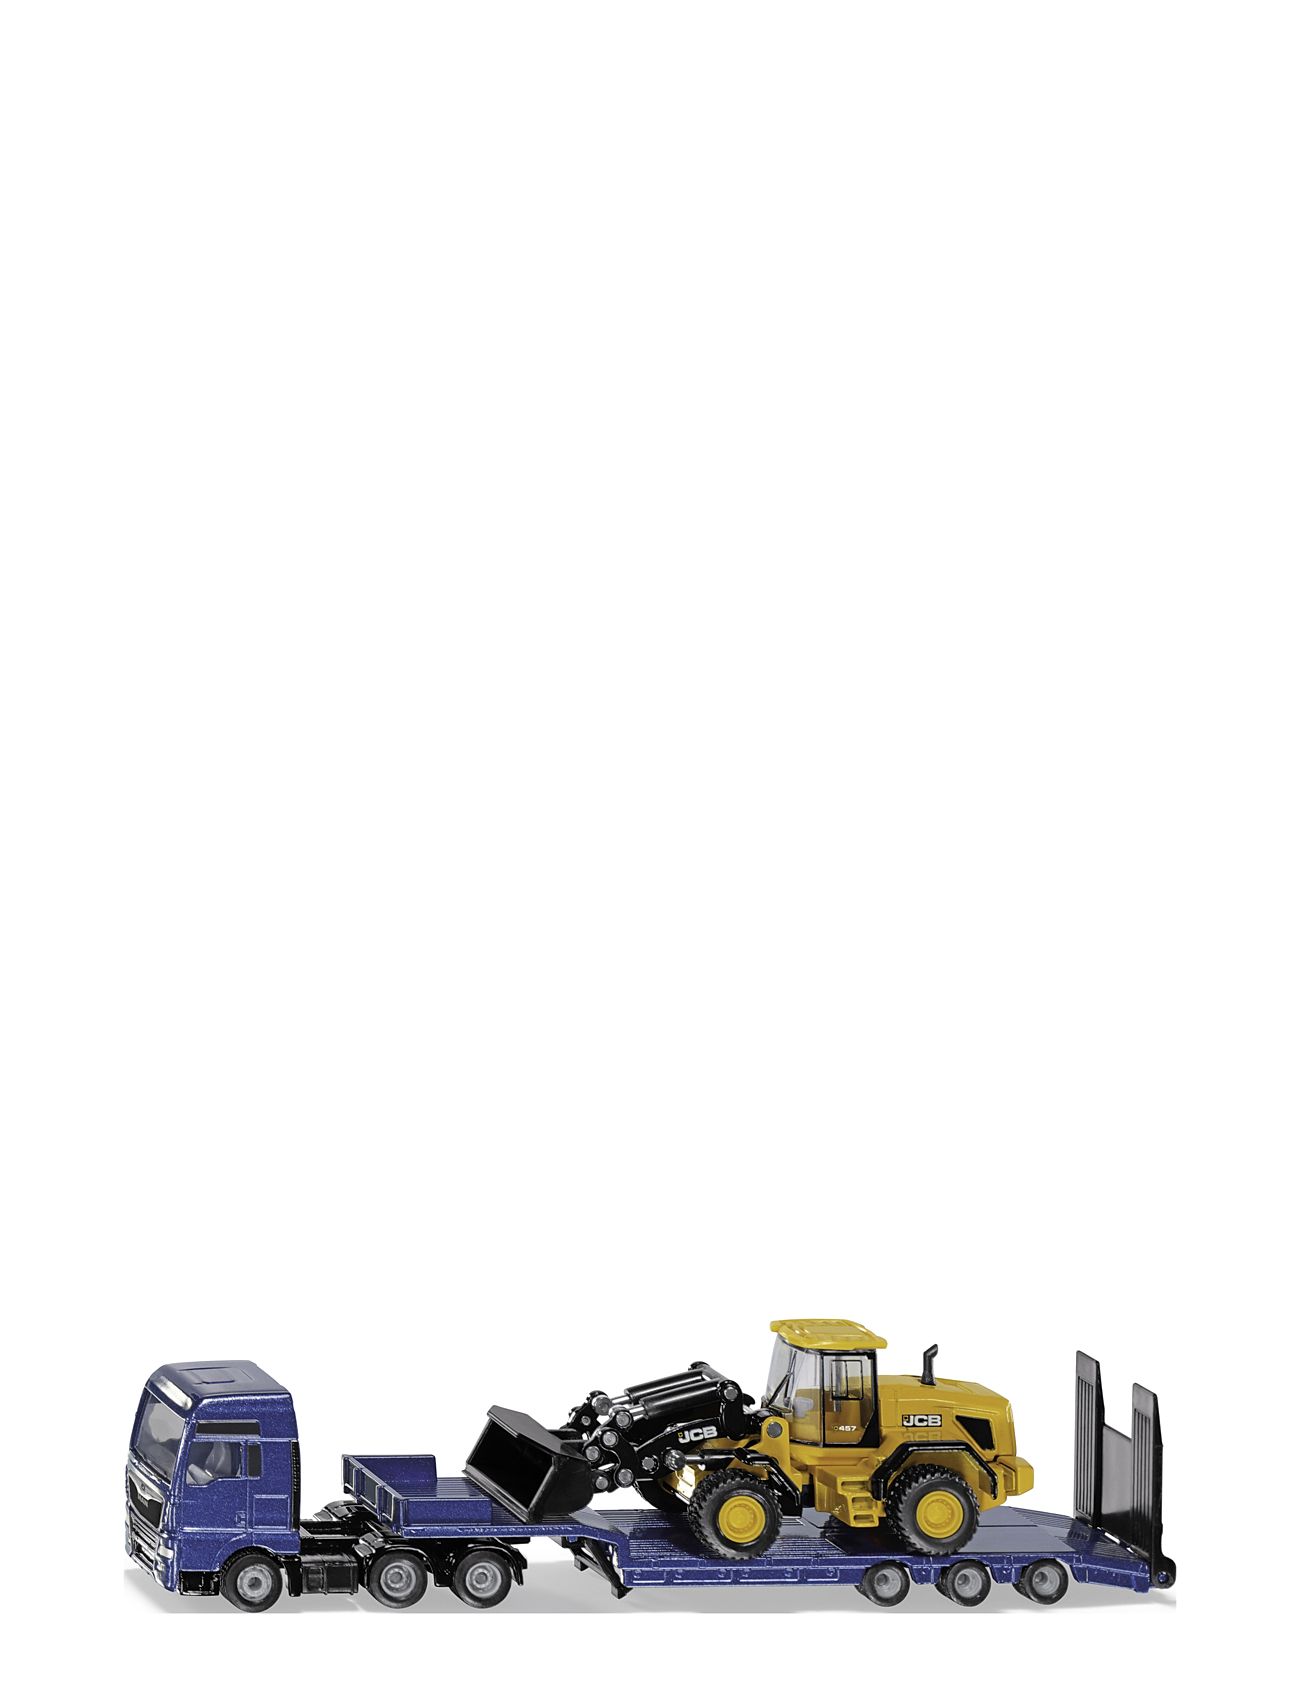 Man Lastb. M Jcb Lastare 1:87 Toys Toy Cars & Vehicles Toy Vehicles Construction Cars Multi/patterned Siku